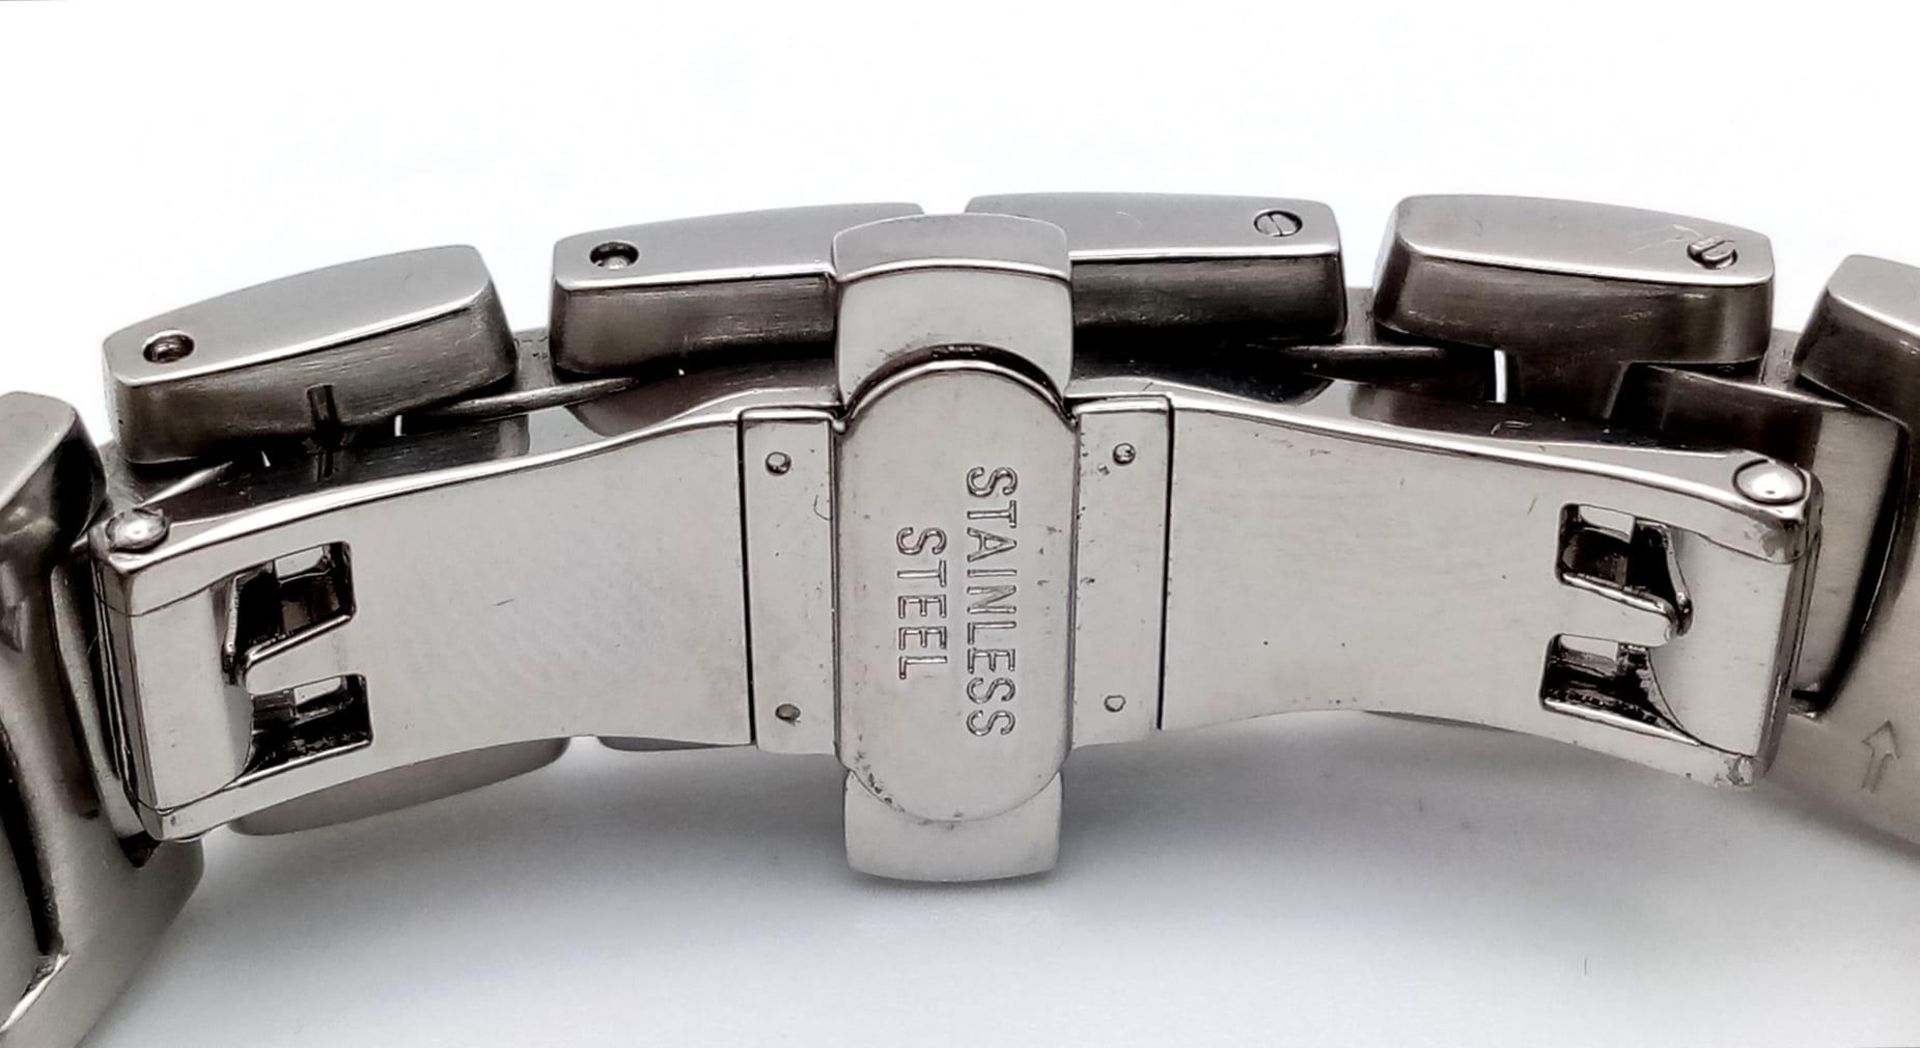 A Ladies Rotary, Bi-Metal, Stone Bezel Set Bracelet Watch Model LB02796.06. Full Working Order and - Image 6 of 6